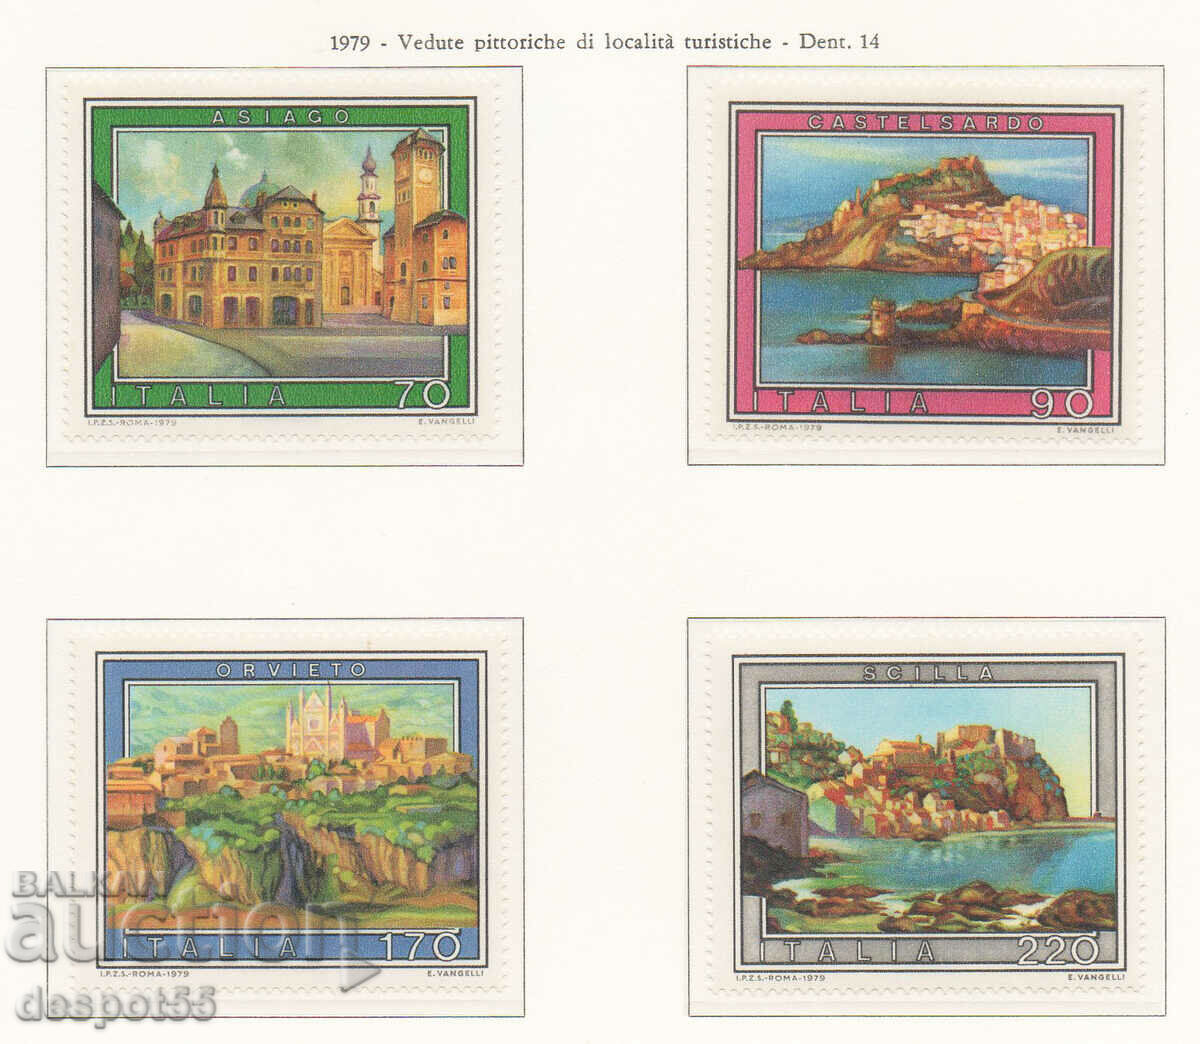 1979. Italy. Tourist propaganda - paintings.